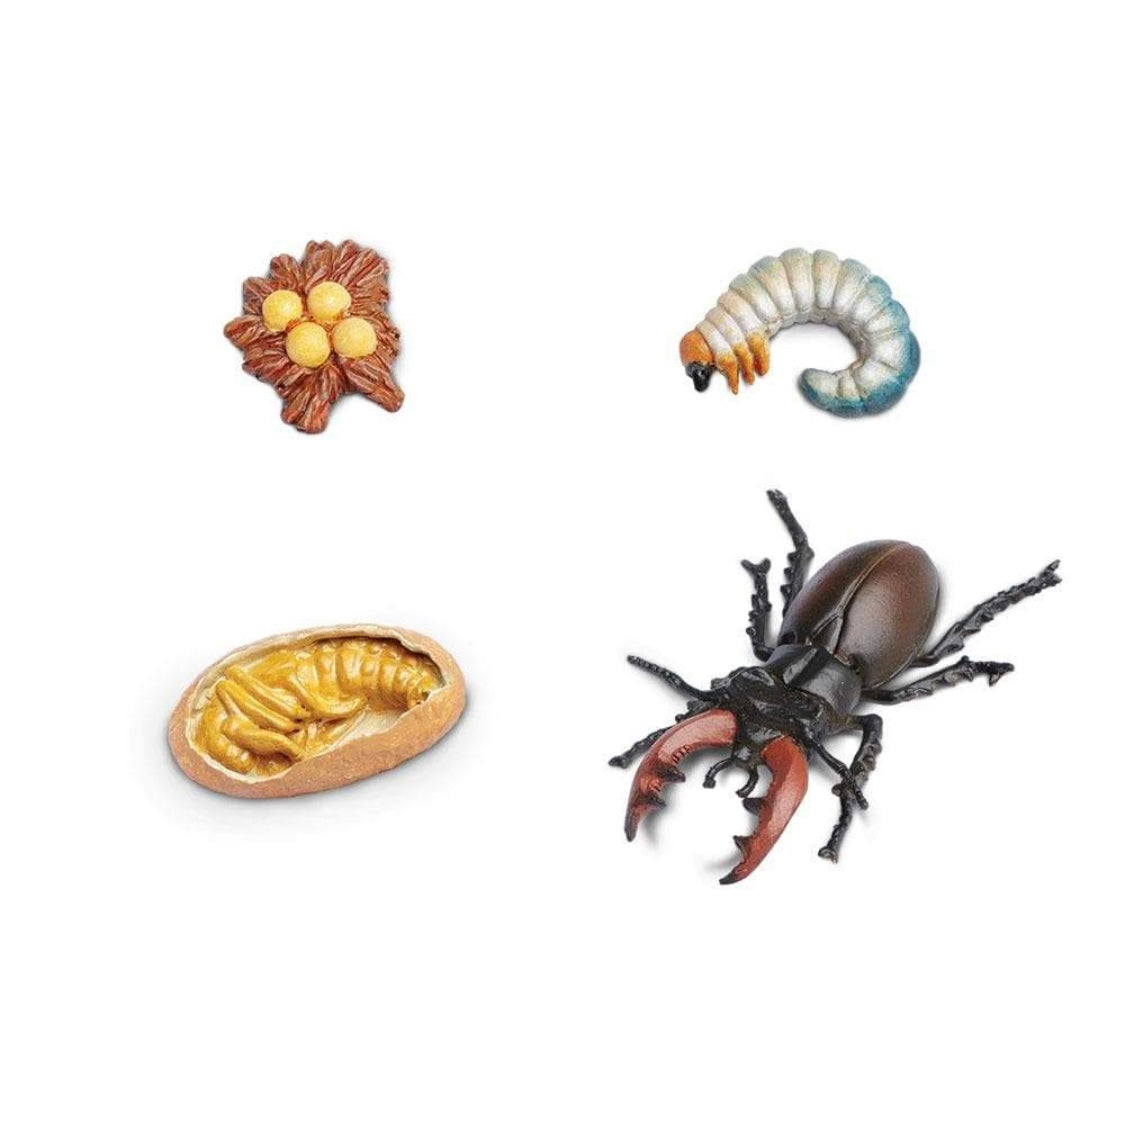 Safari Ltd. Life Cycle of a Stag Beetle